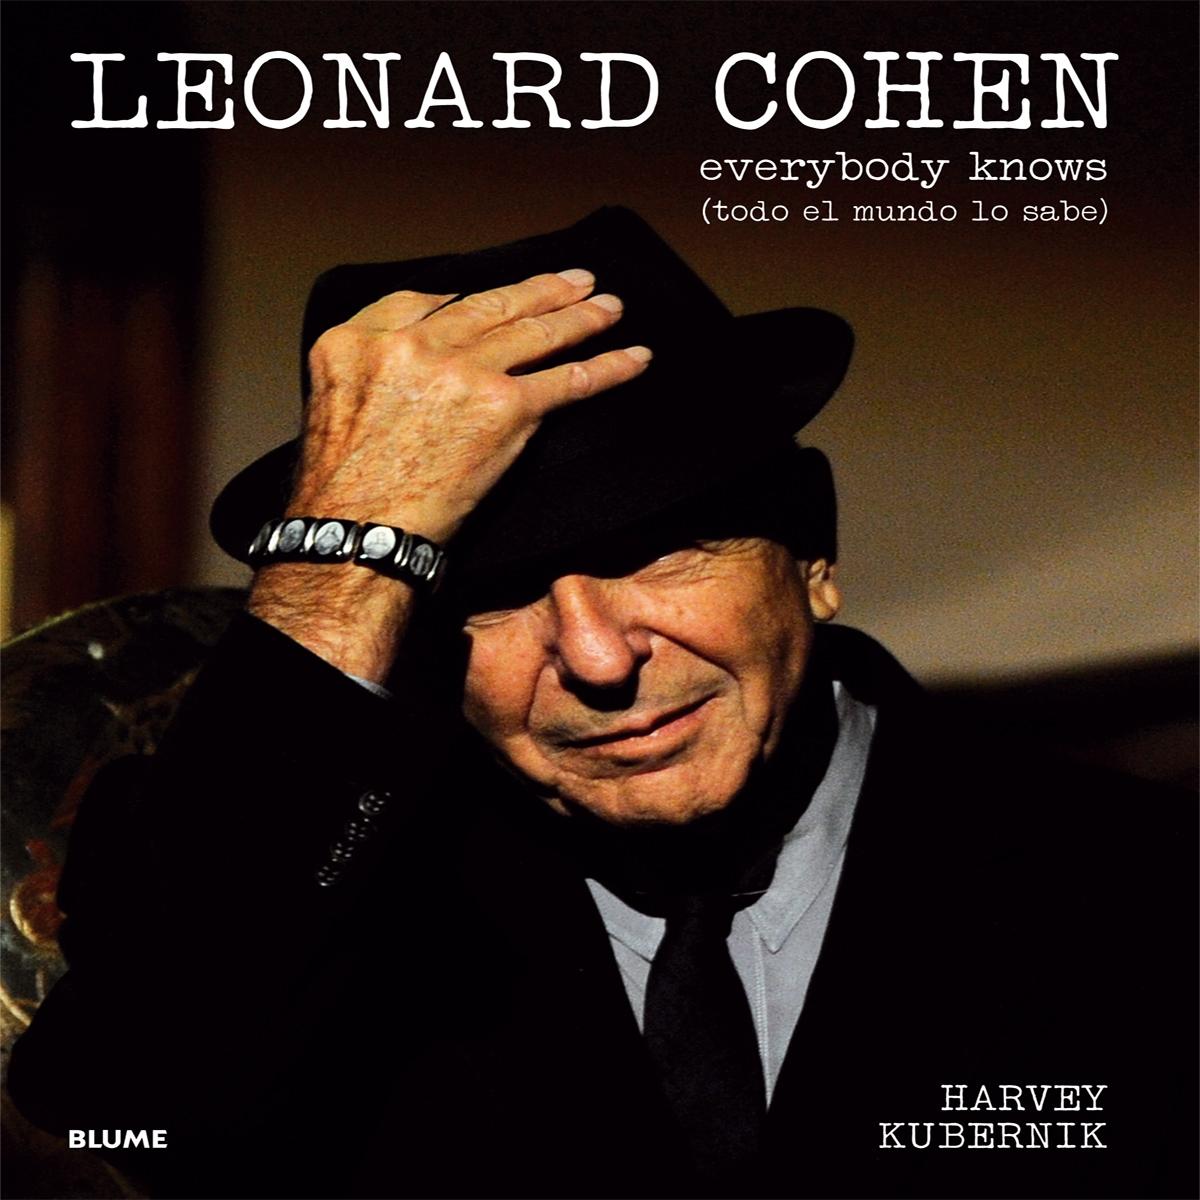 Leonard Cohen "Everybody Knows"